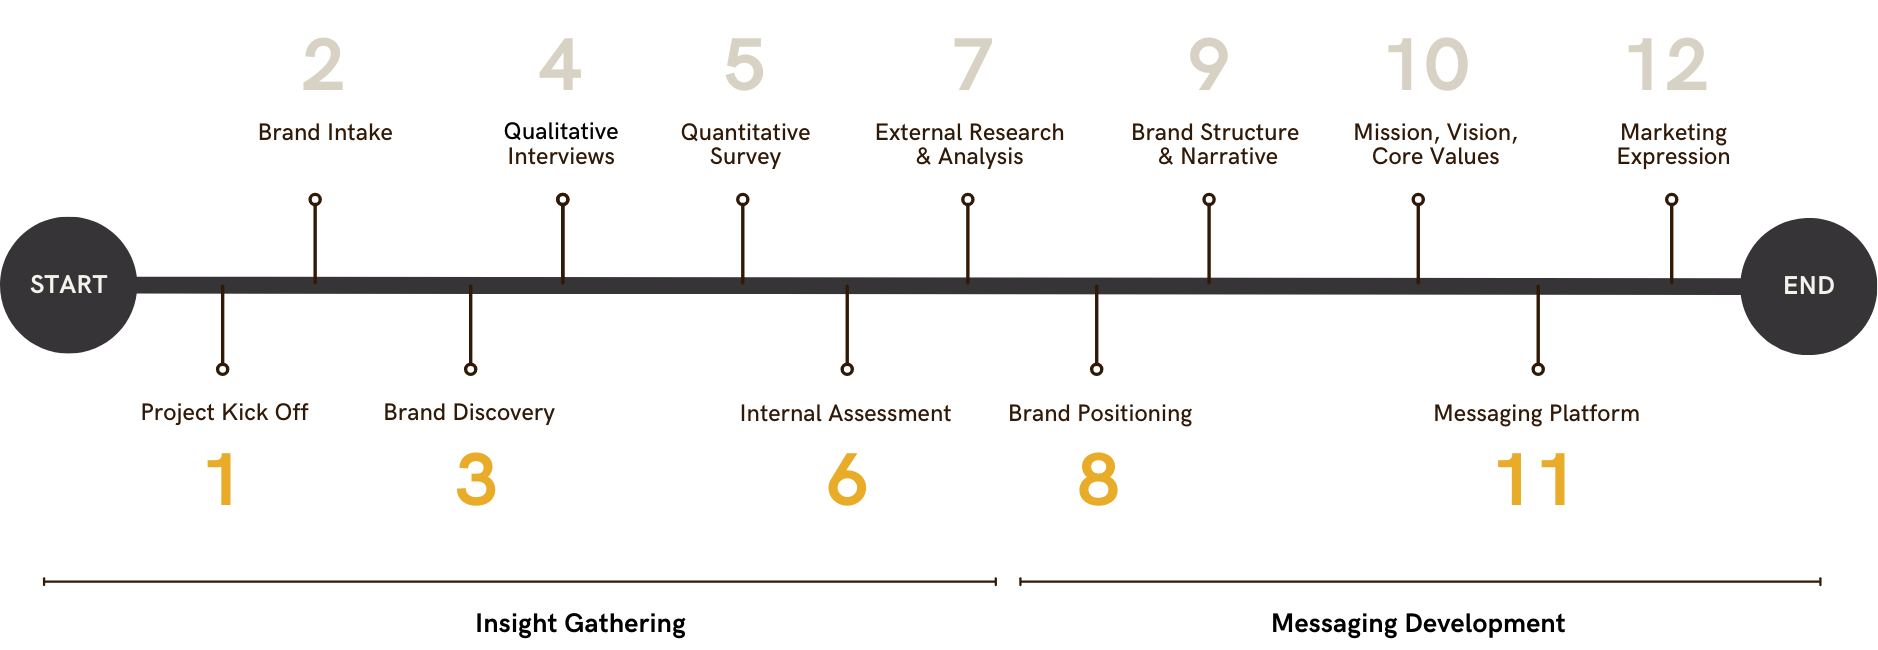 Timeline explaining the brand positioning process